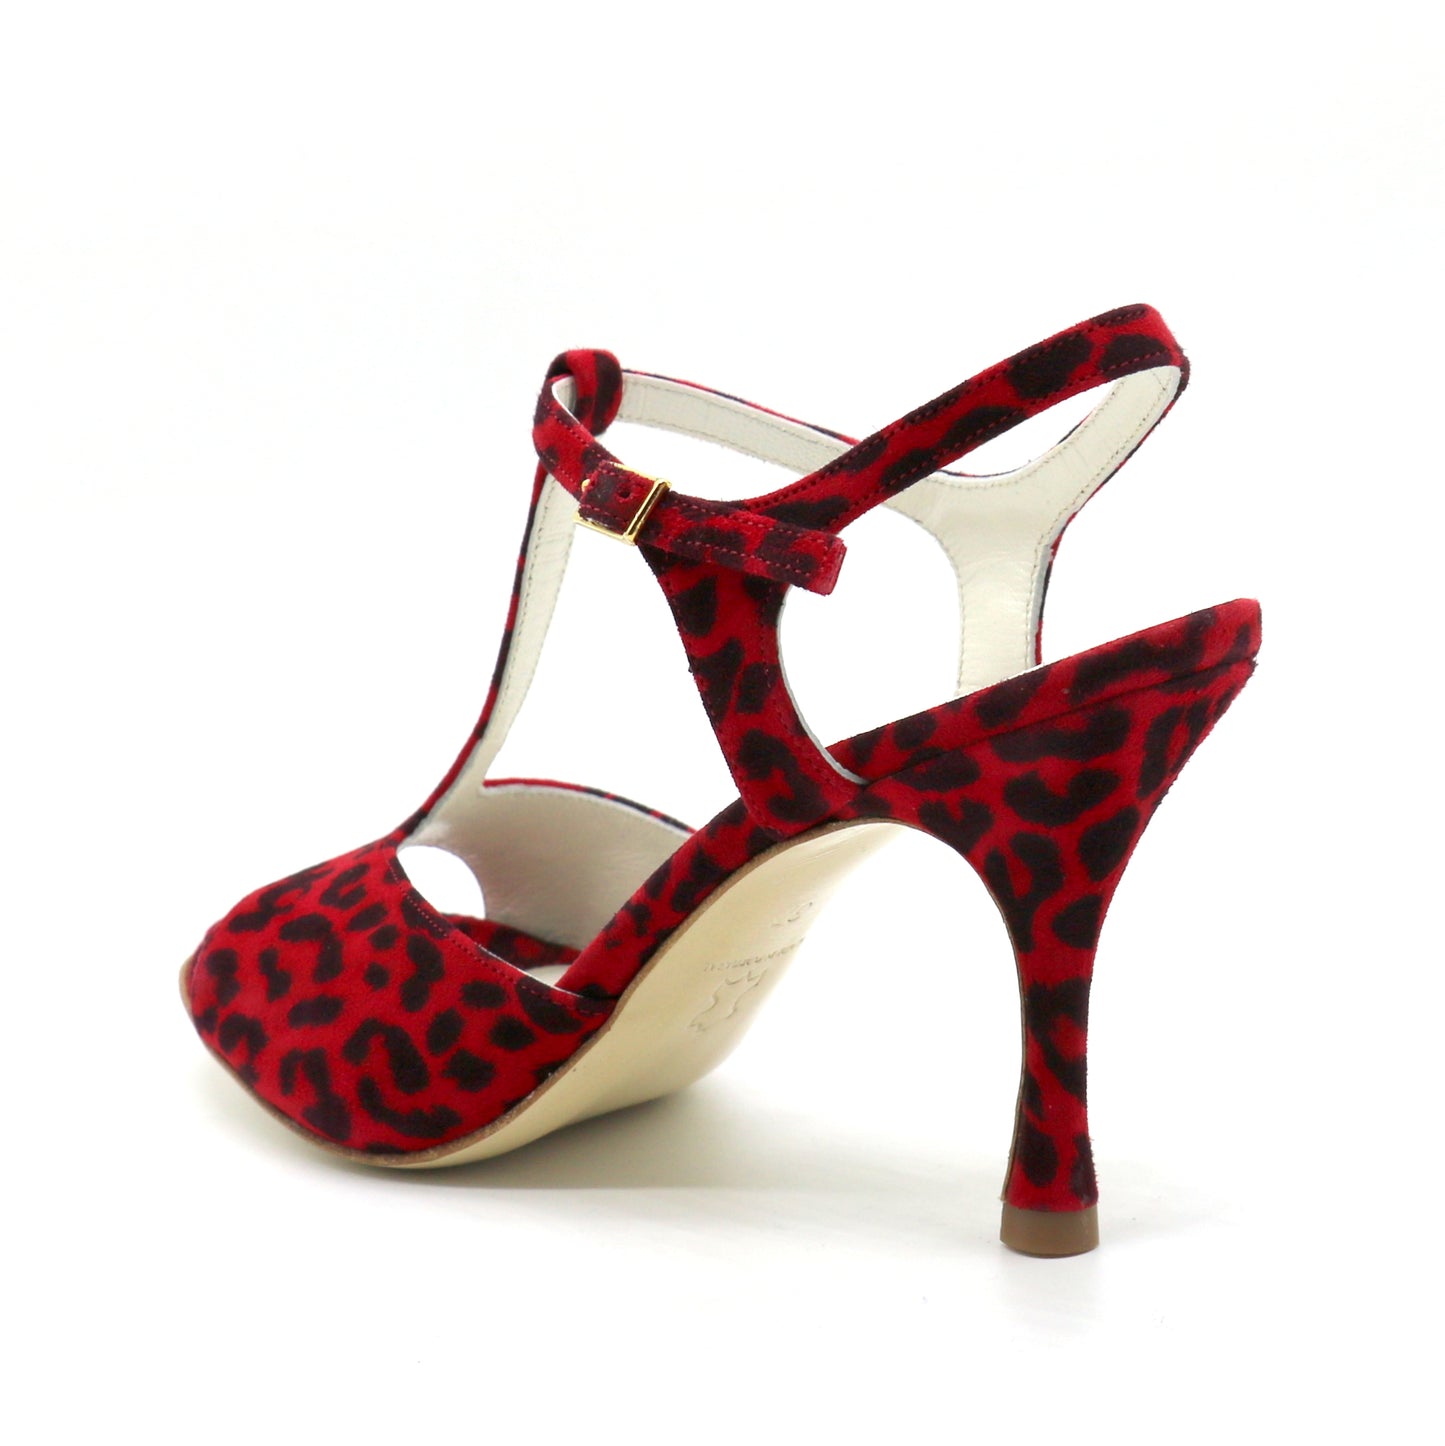 Sencillo Leopard Red and Black heels 8cm